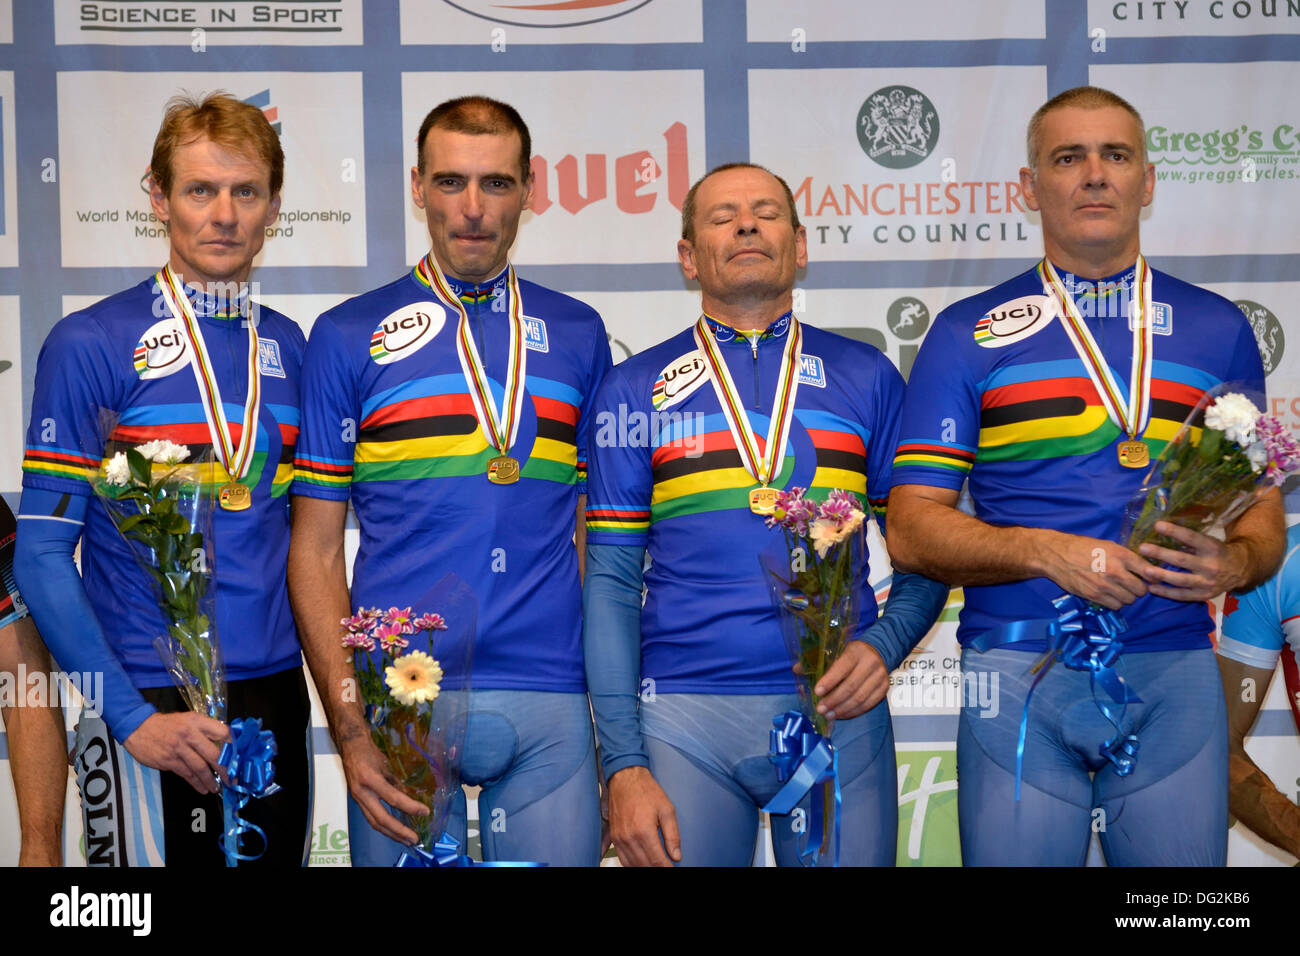 World Masters Cycling Championships Manchester, UK 12 October 2013